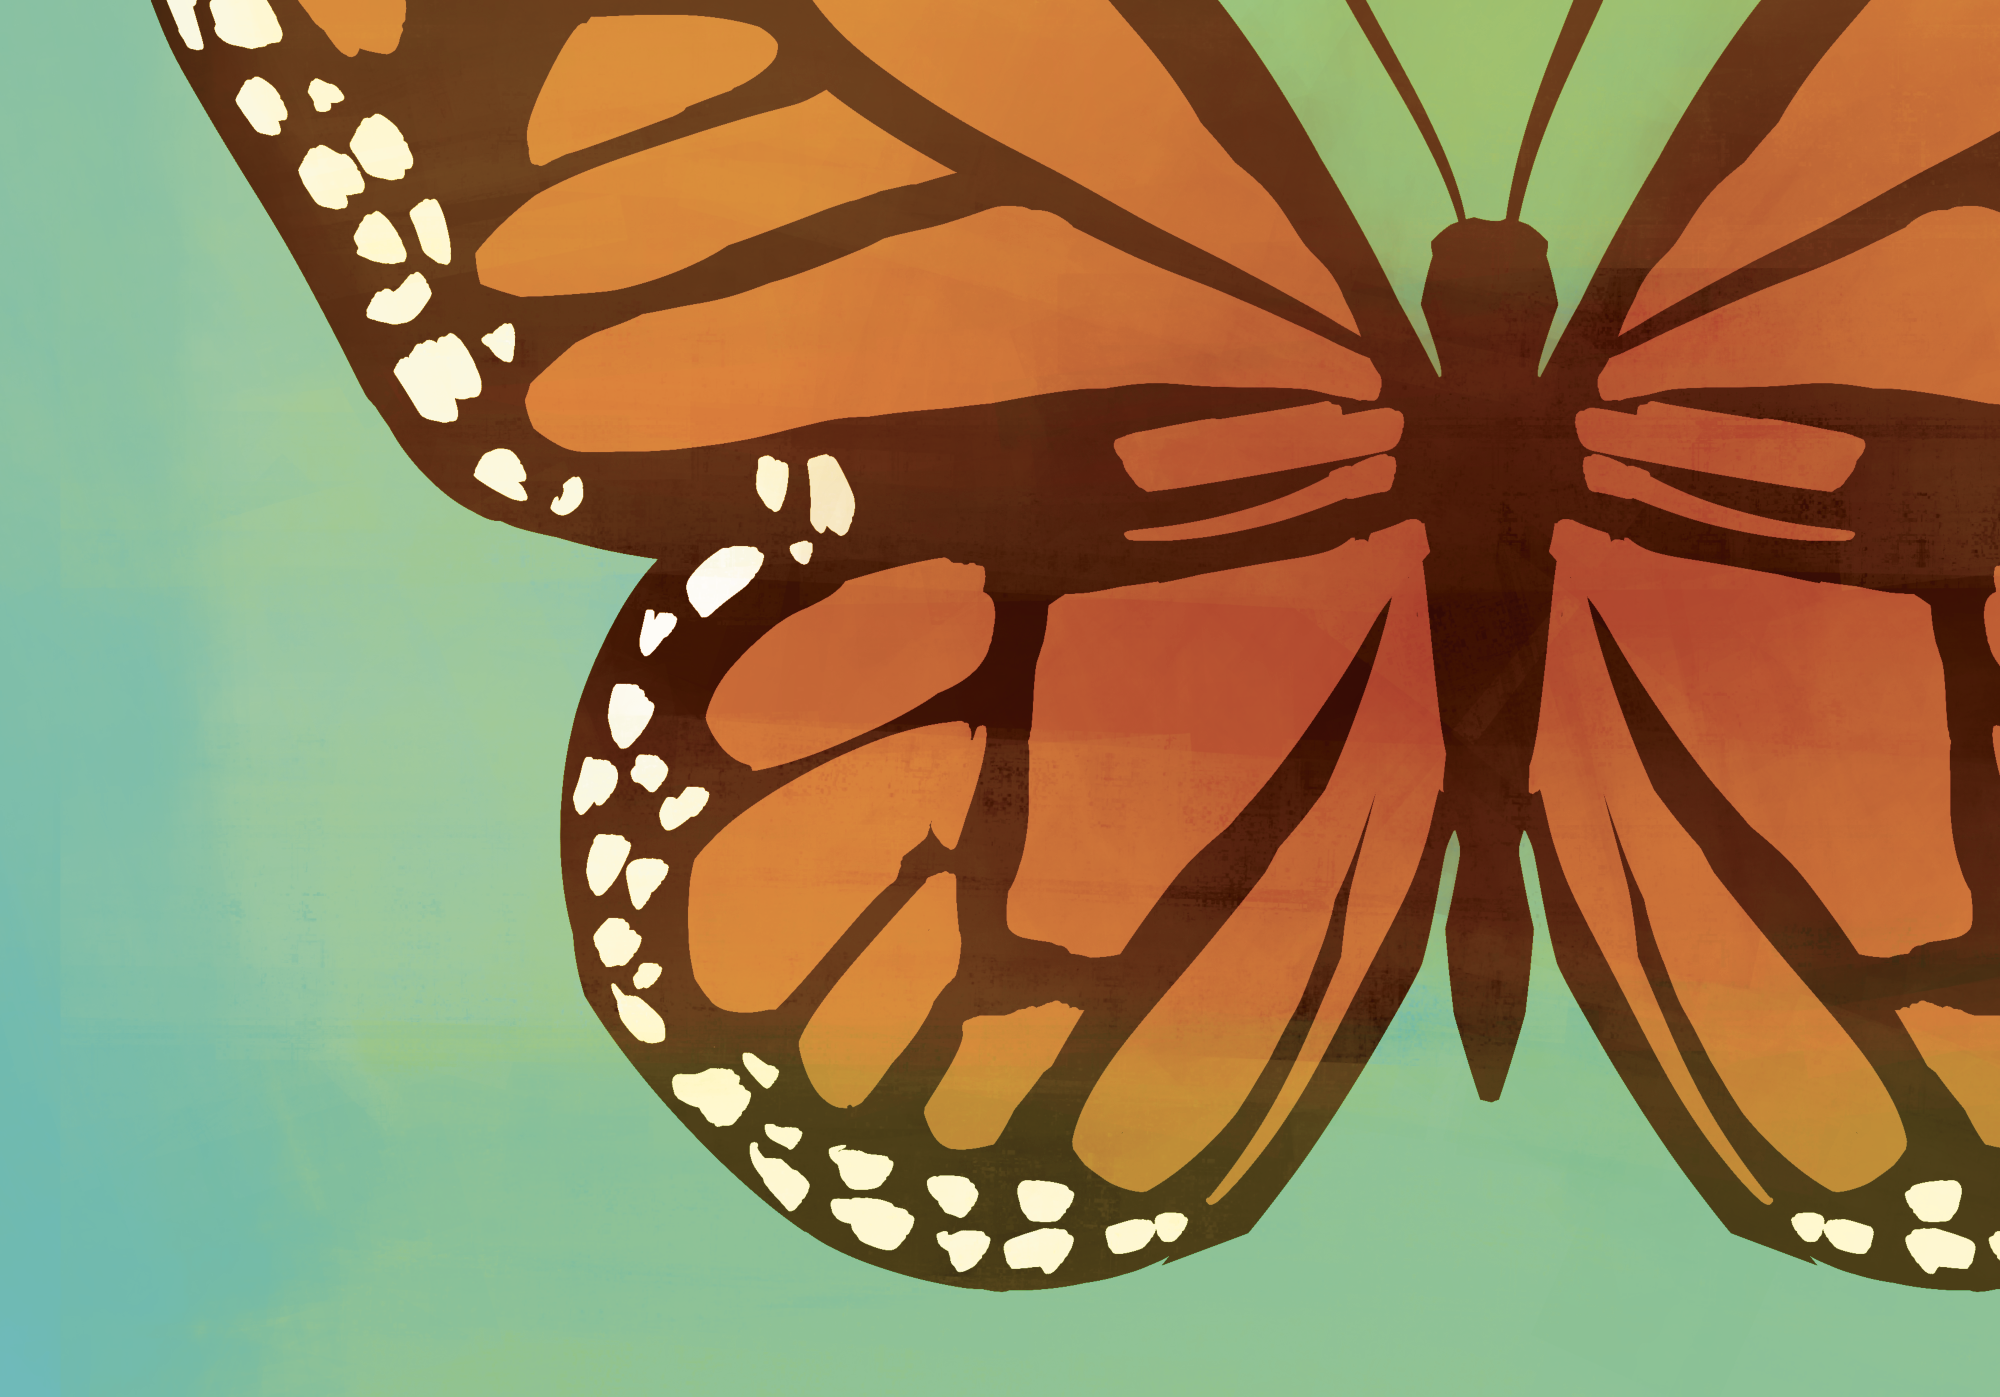 Goodbye, Butterfly: A strange dream – The Flor-Ala